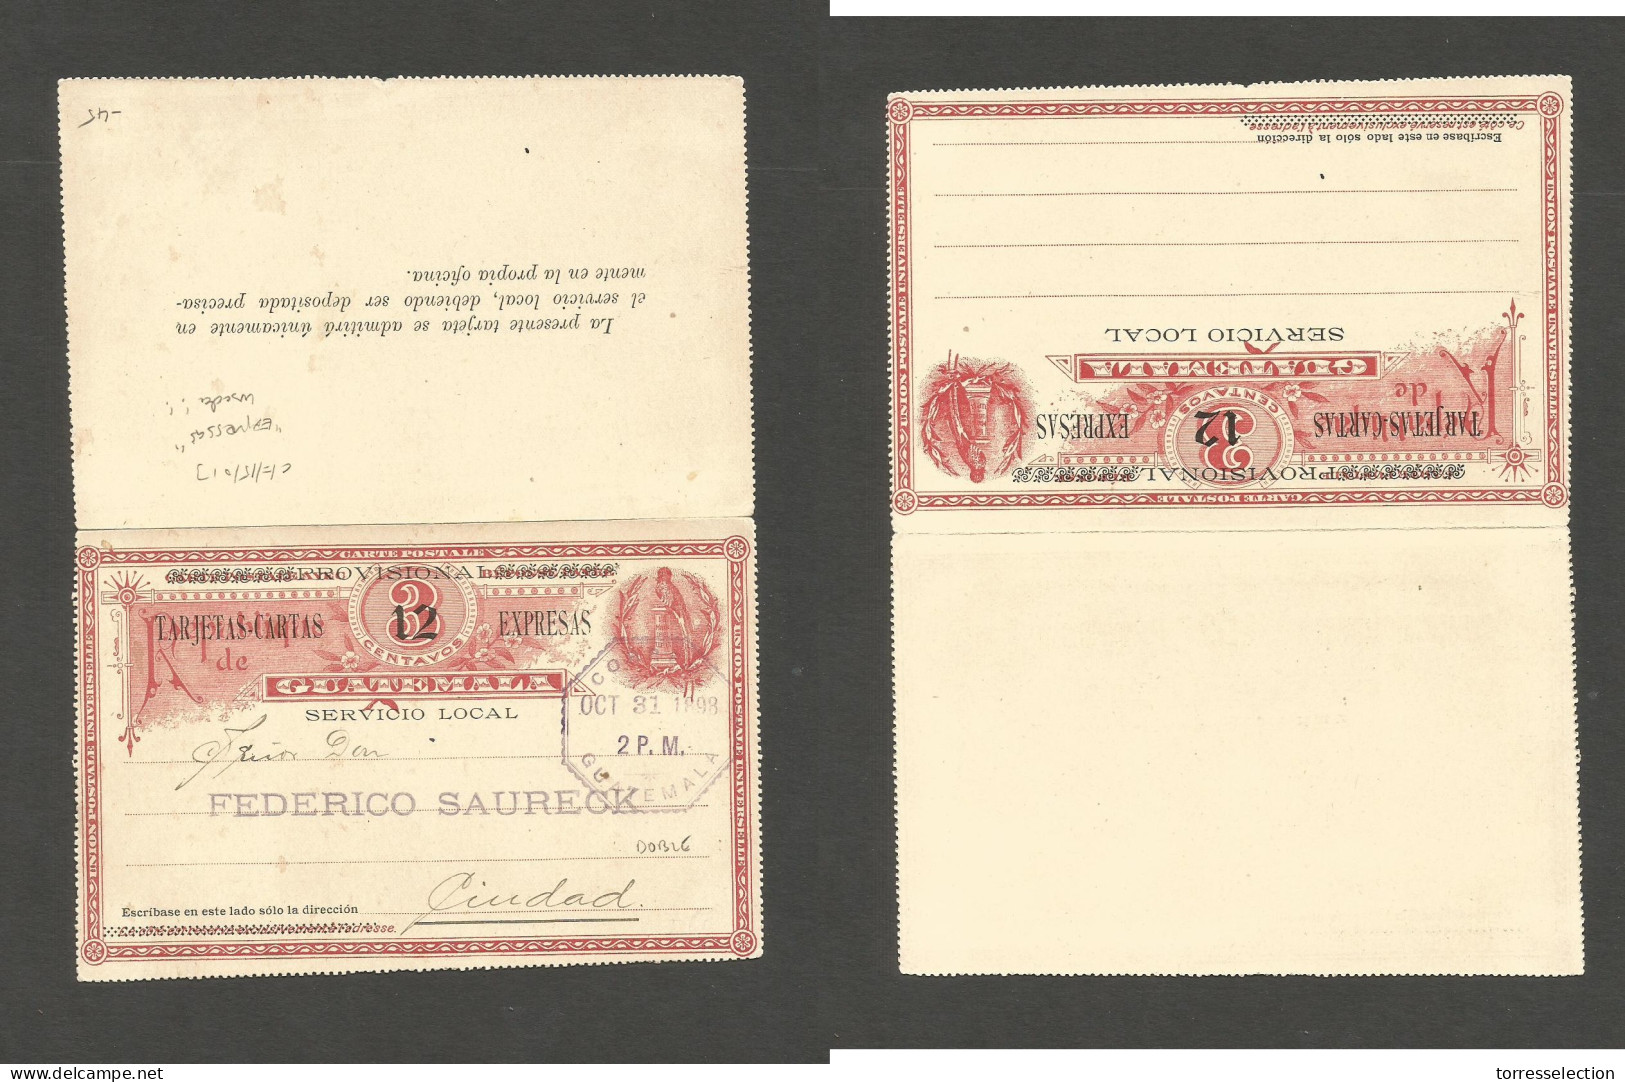 GUATEMALA. 1898 (31 Oct) GPO Local Guatemala City Usage. 12c/3c. Tarjetas Express Ovptd Issue. Fine Double Card. One Way - Guatemala